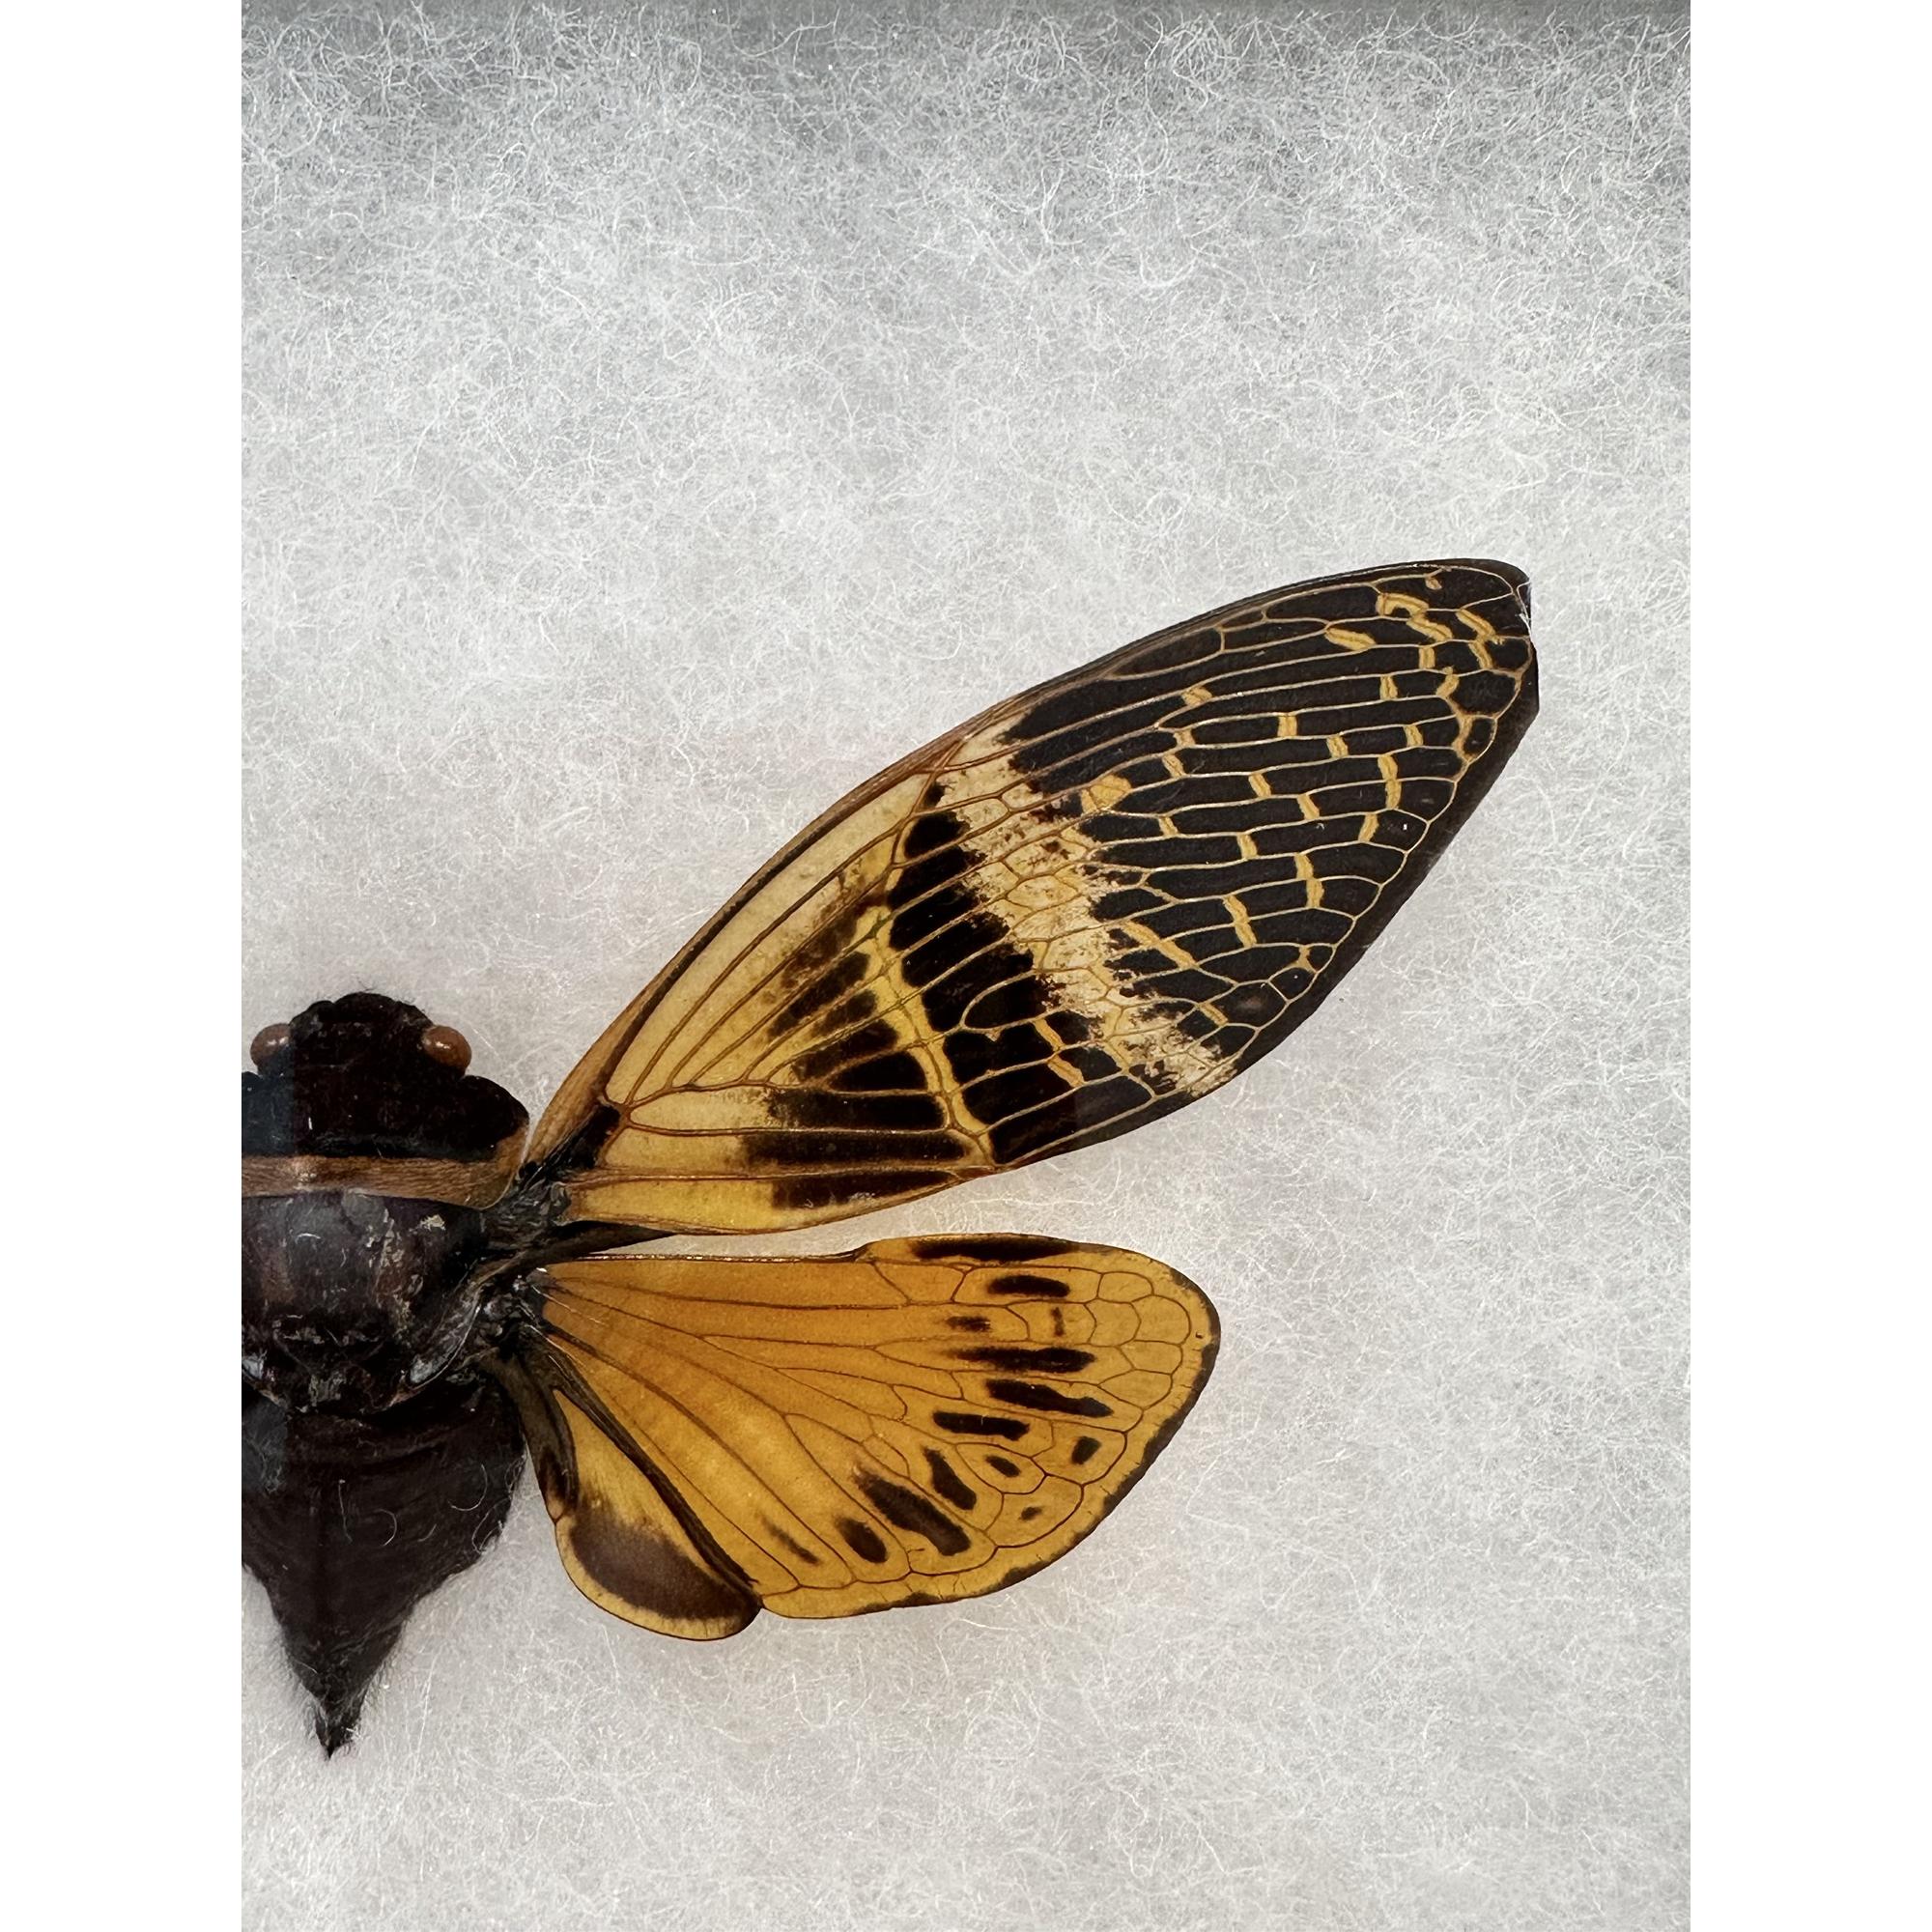 Cicada,Angamina Floridula in Riker box Prehistoric Online